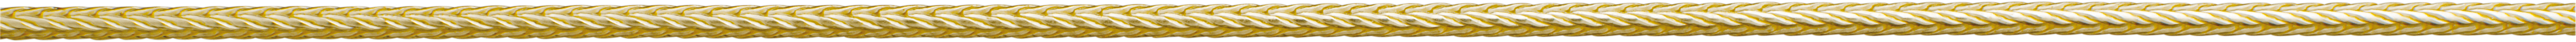 Fox tail chain gold 750/-Gg Ø 1,30mm